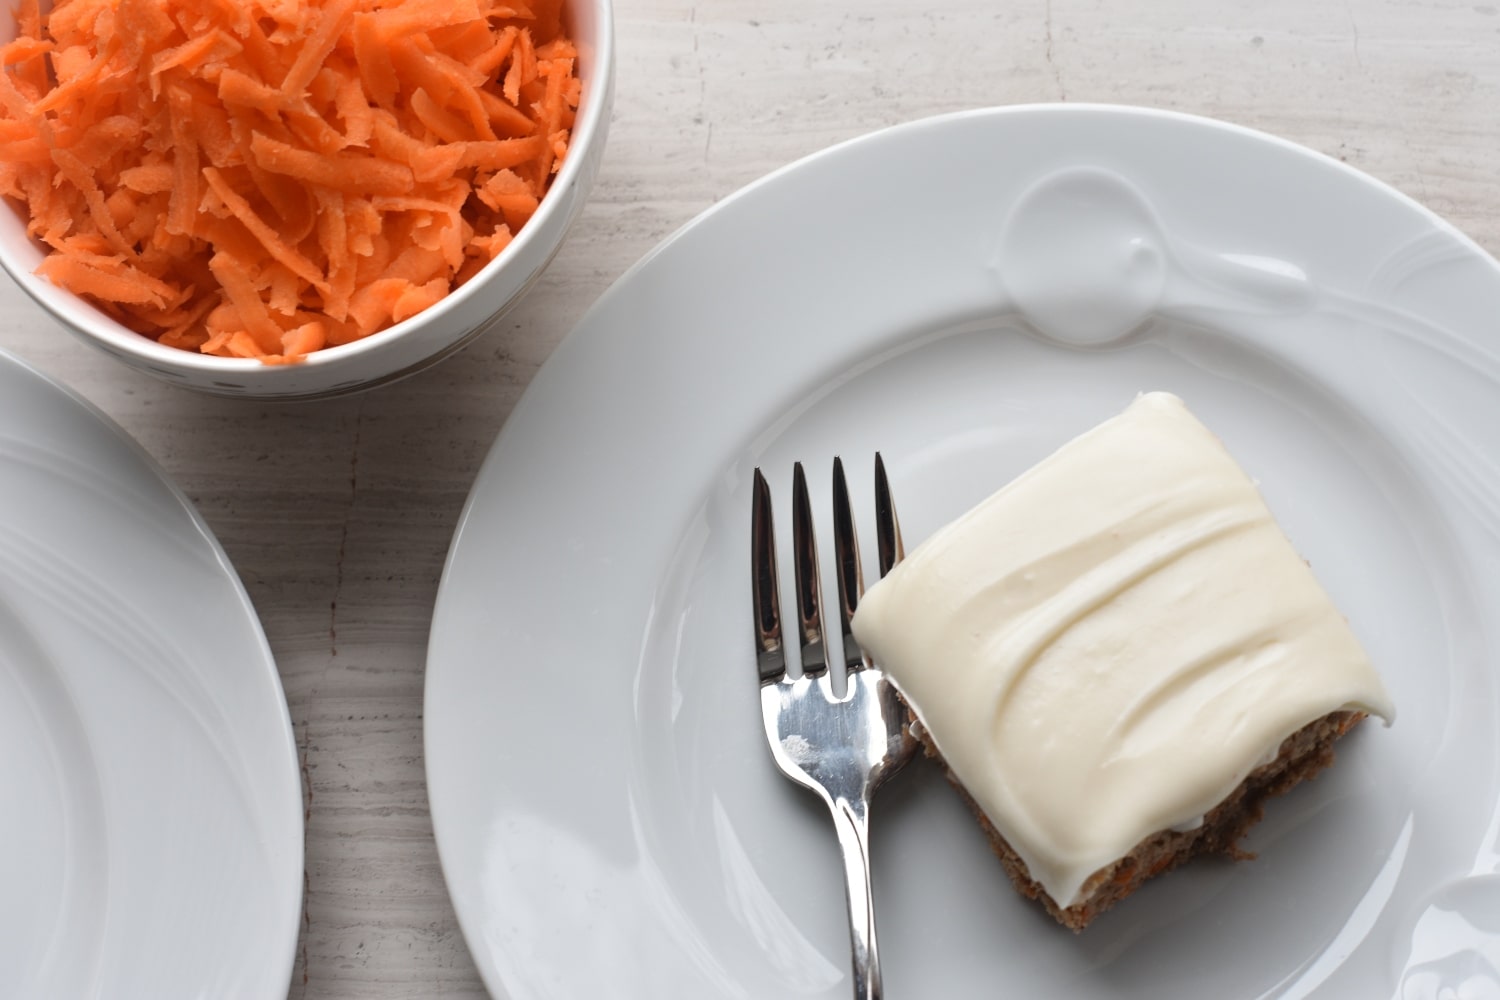 Vegan Gluten-Free Carrot Cake